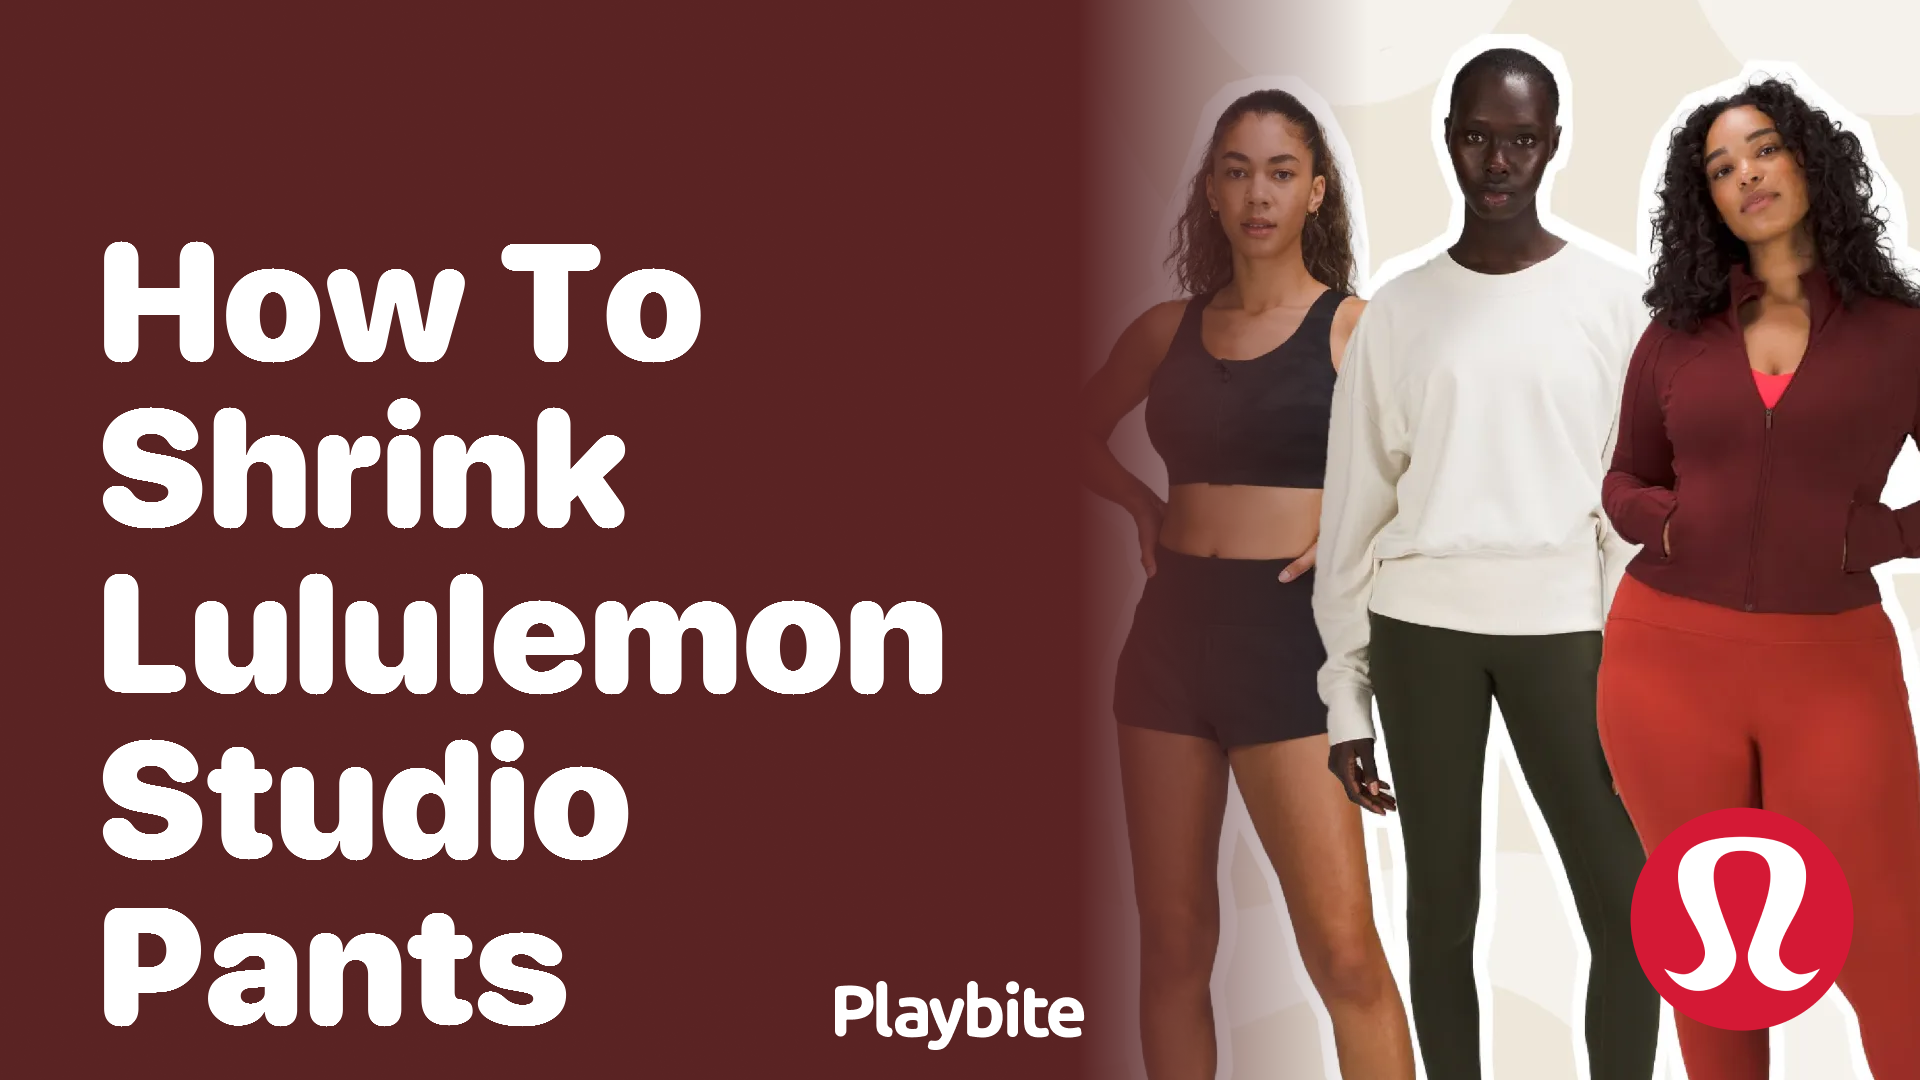 How to Shrink Lululemon Studio Pants: A Simple Guide